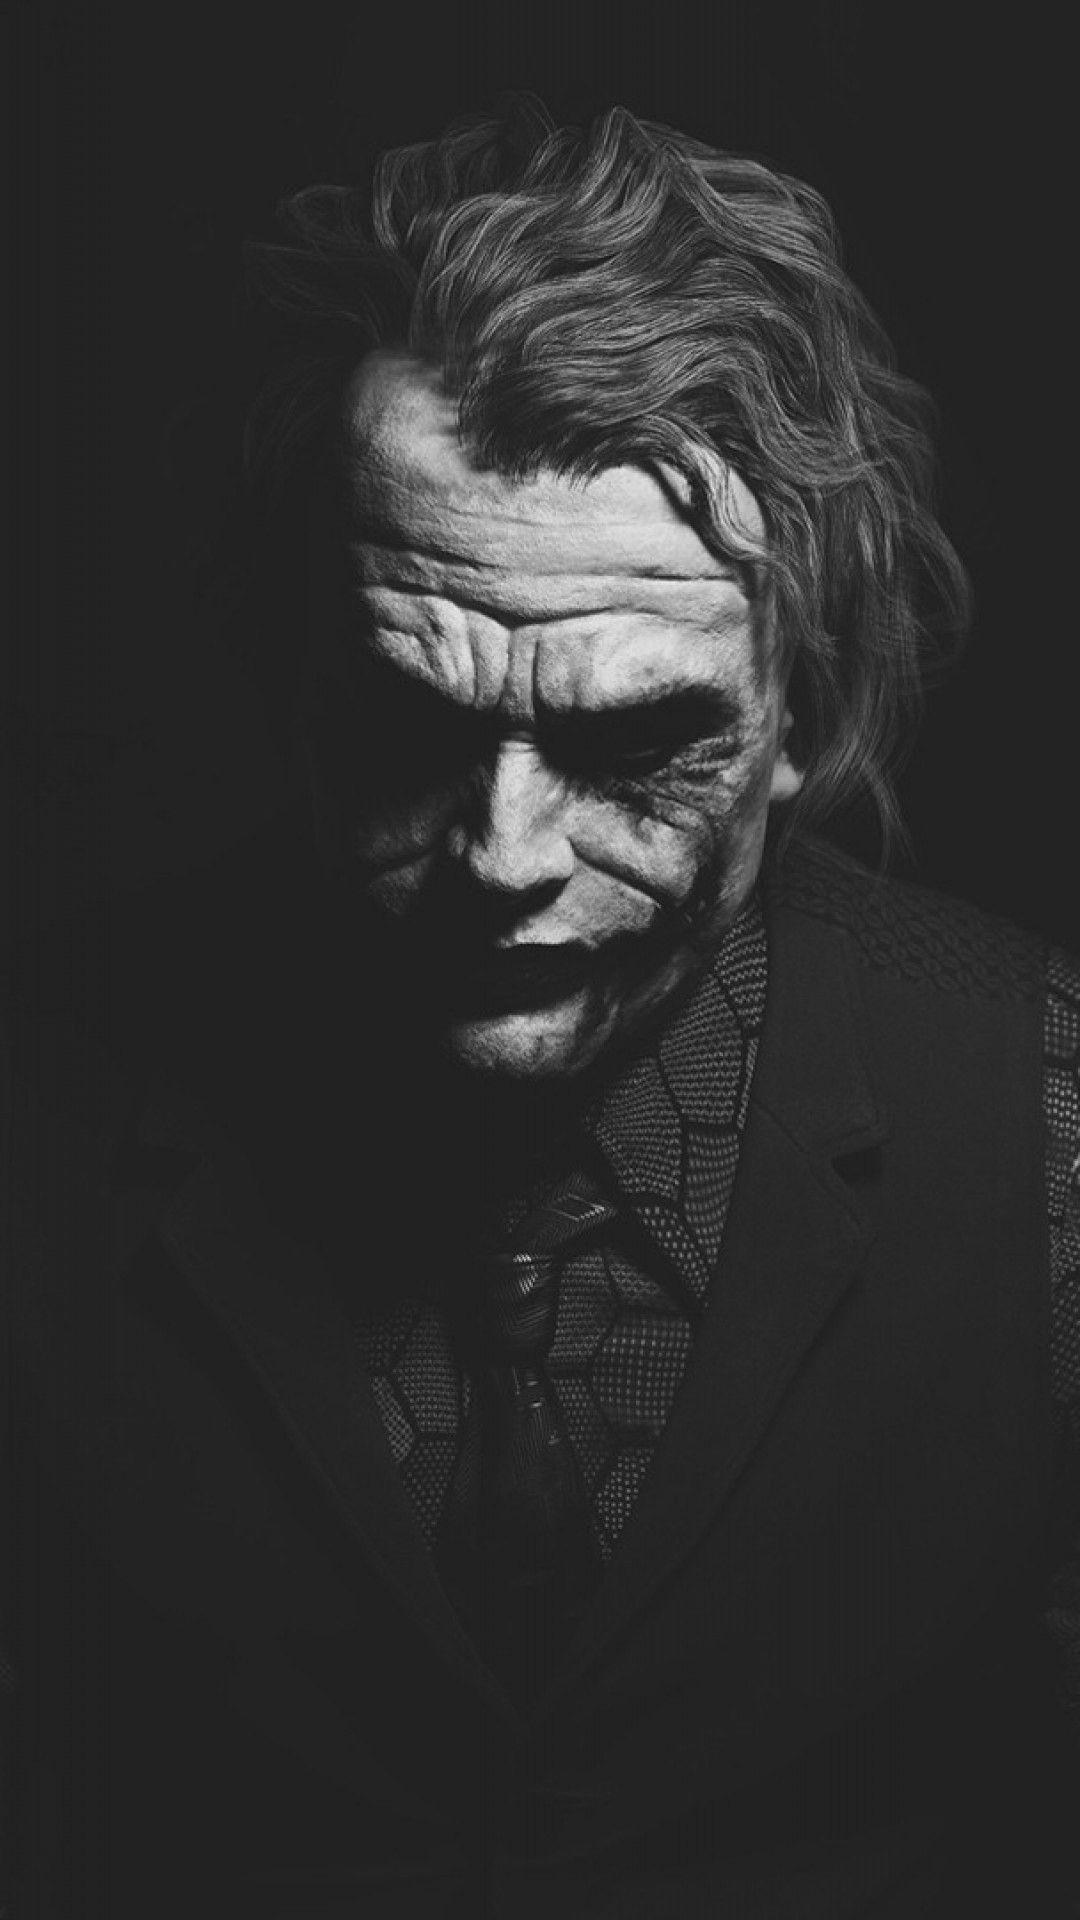 Heath Ledger Joker Wallpaper HD 1080x1920 picture. Painting painted